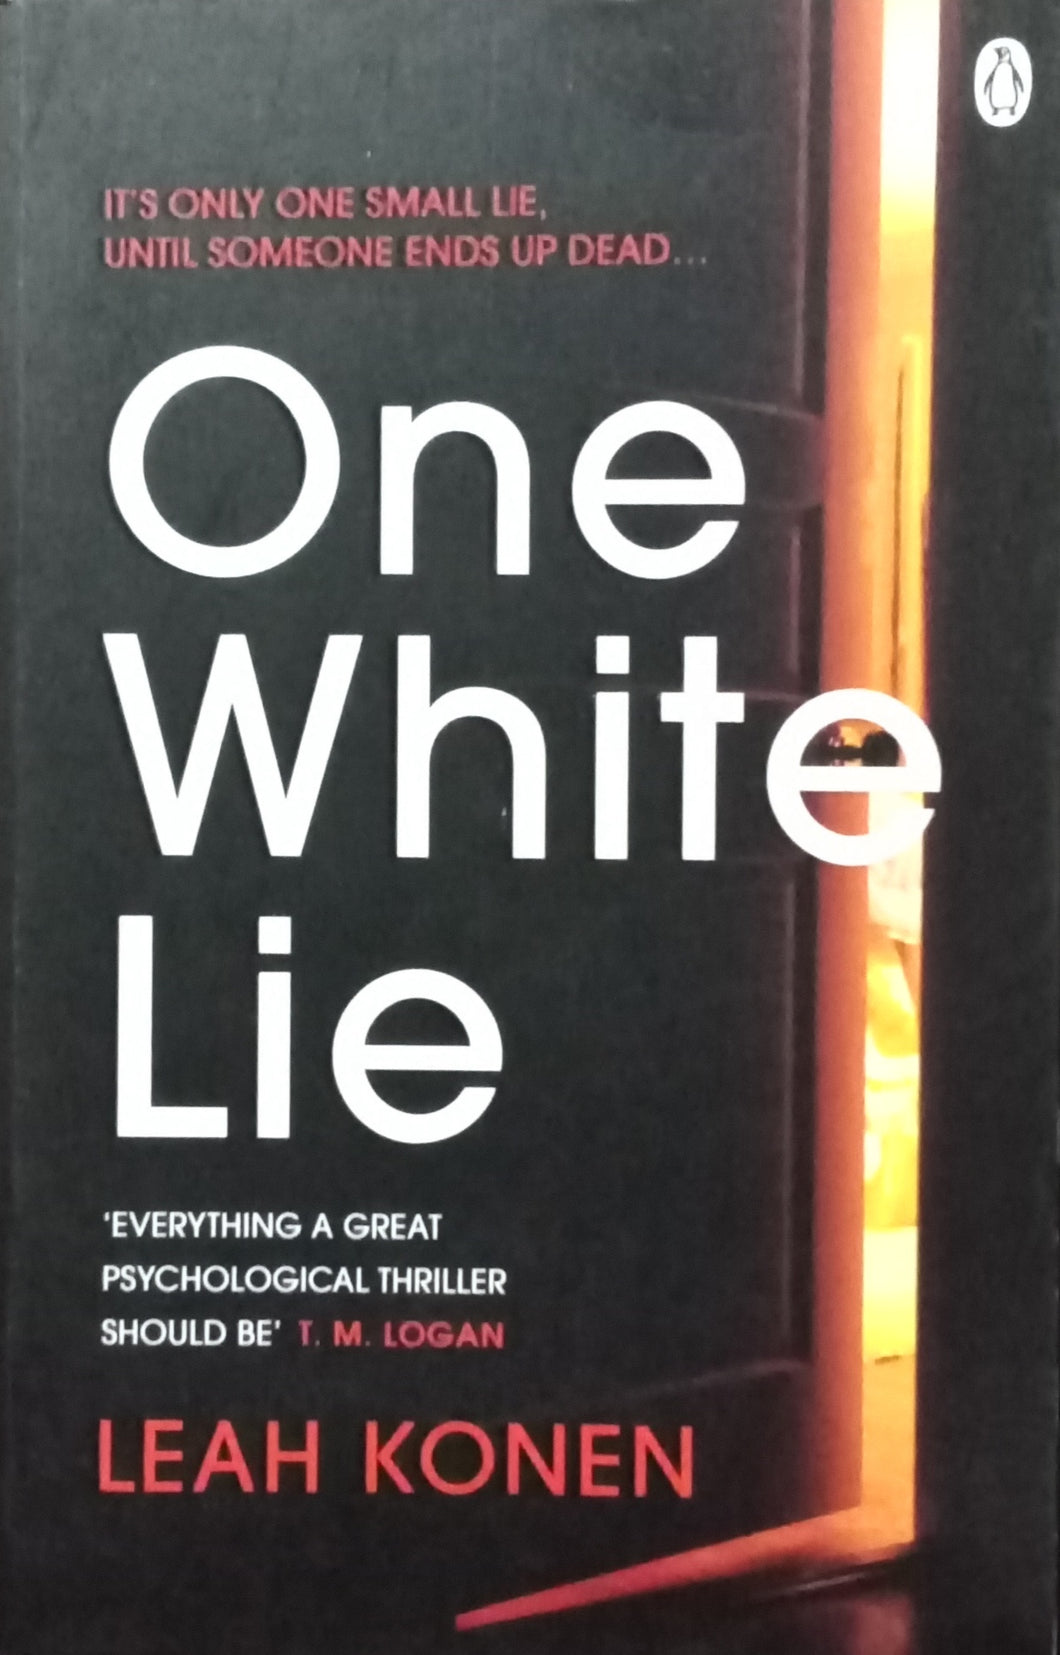 One White Lie by Leah Konen